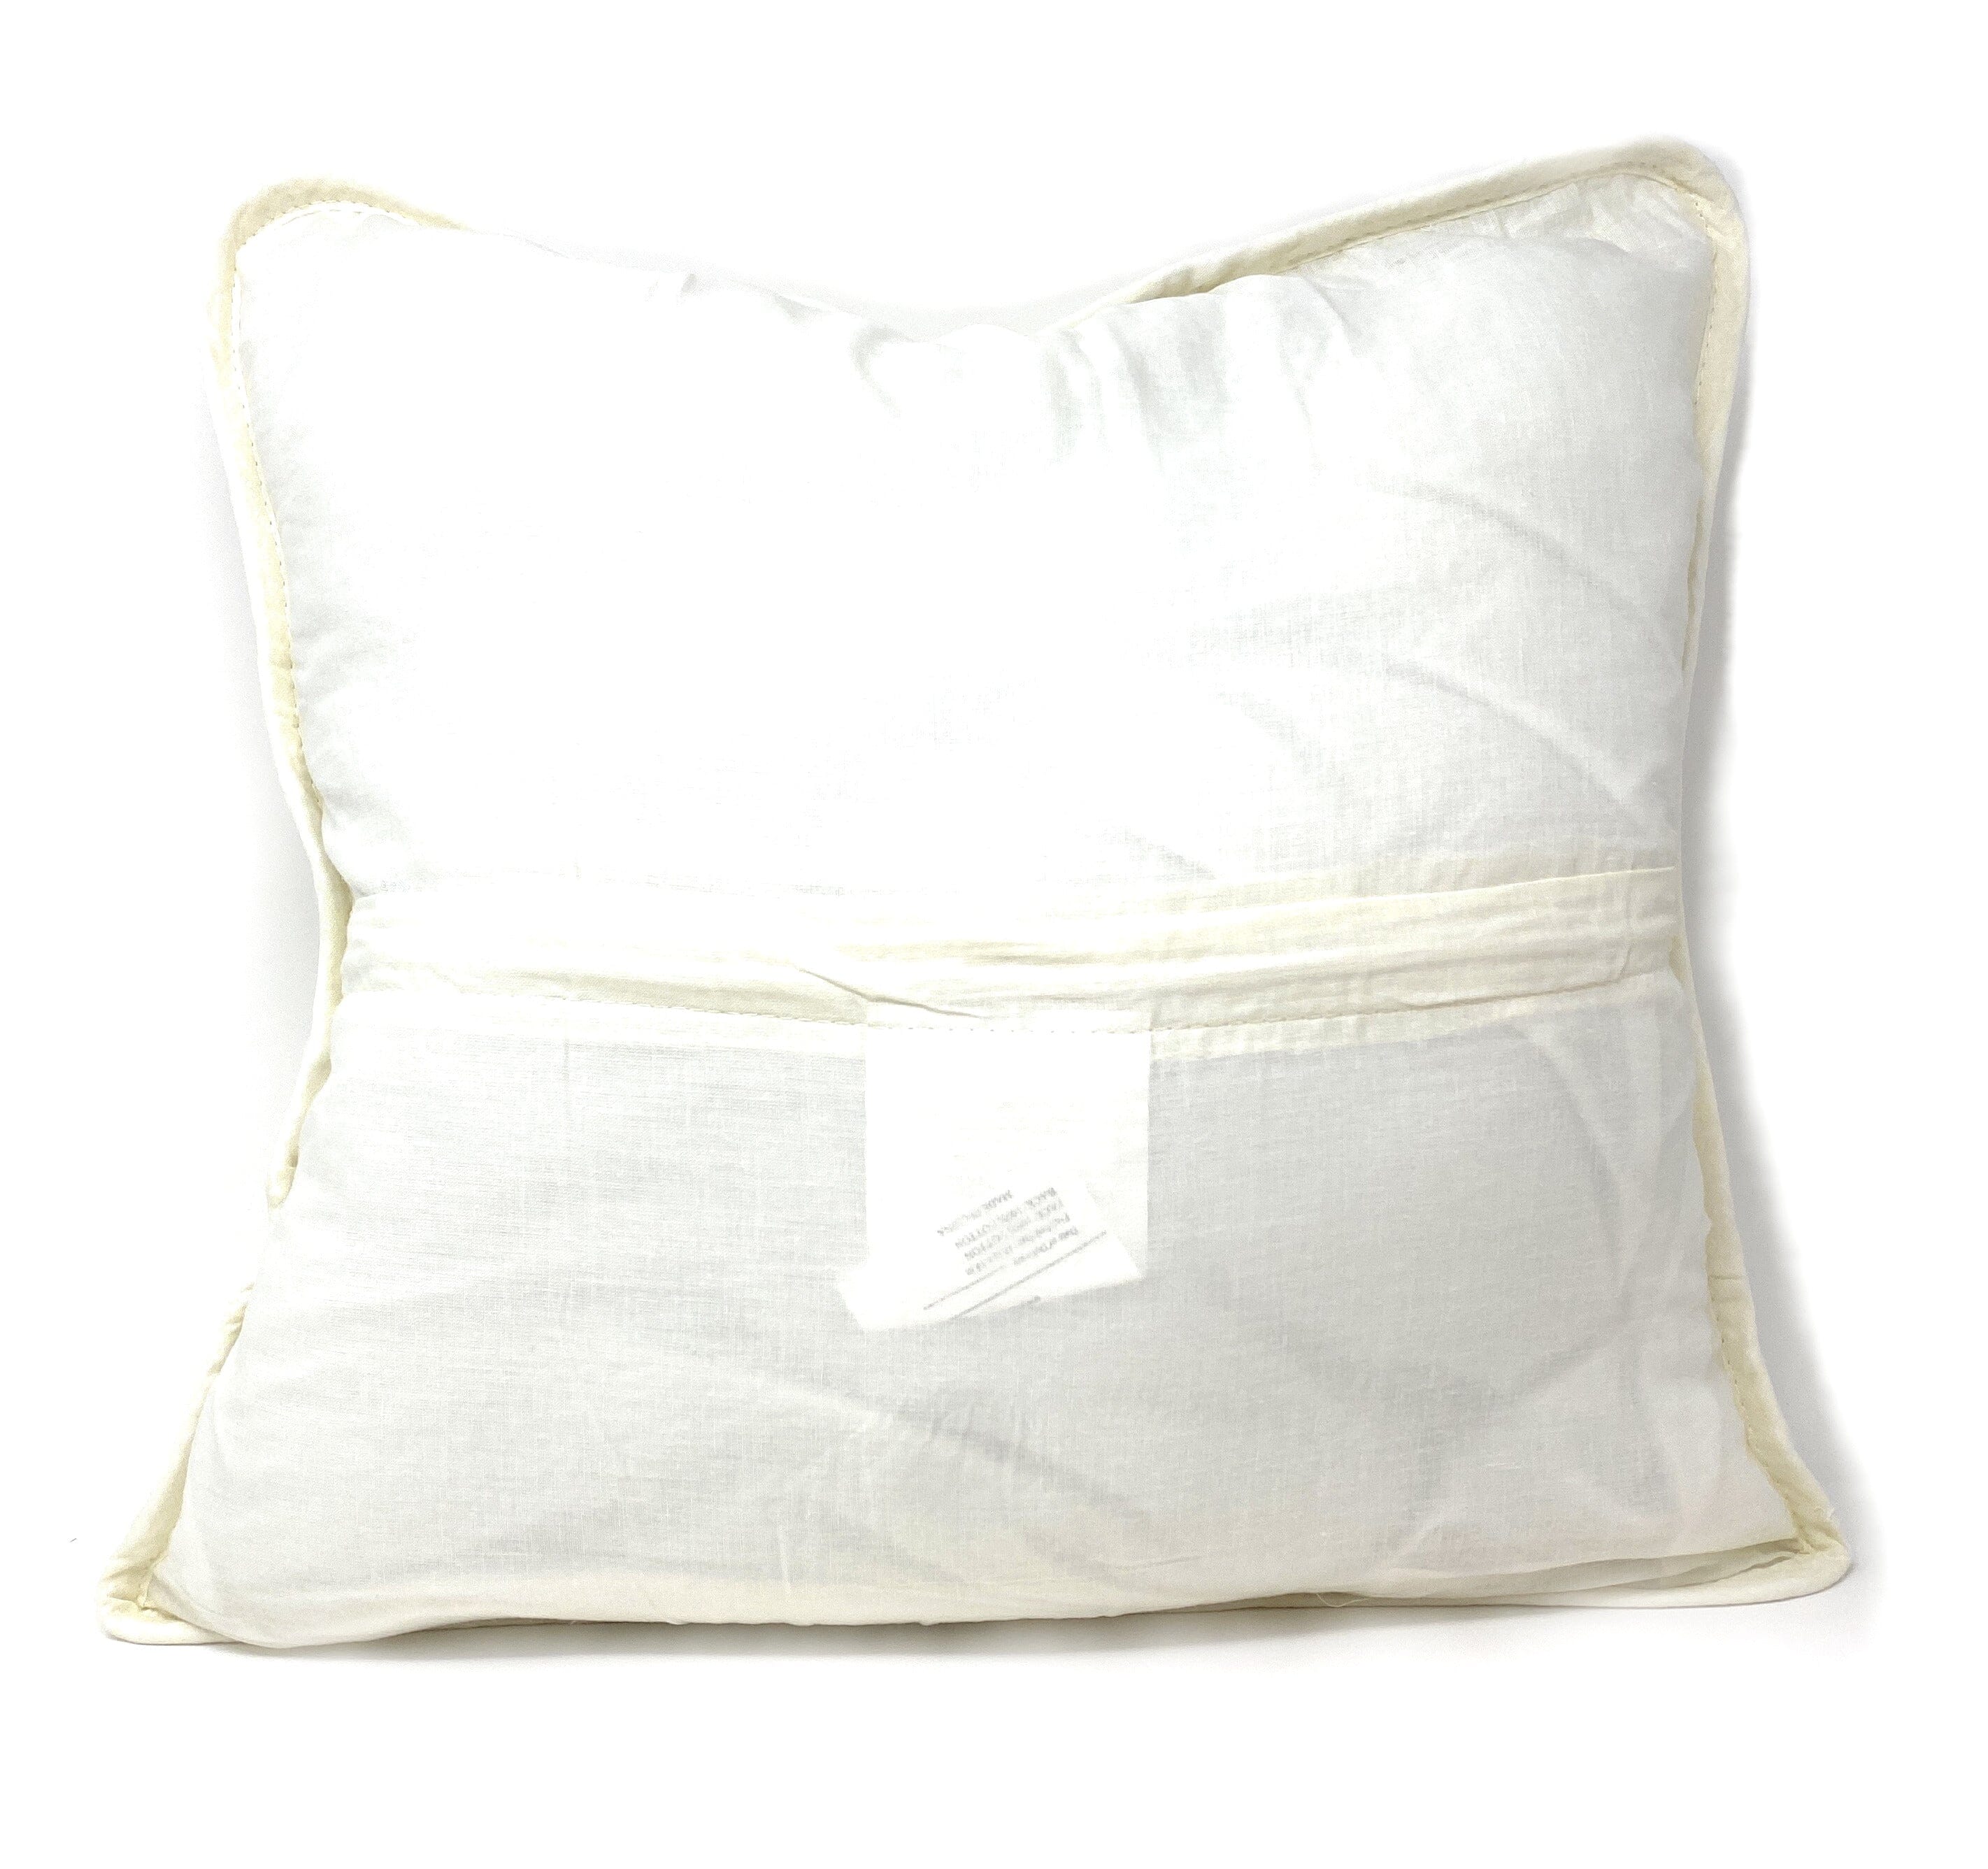 Tache Cotton Ivory White Paisley Damask Matelassé Powder Snow Cushion Covers / Euro Sham (JHW-643) - Tache Home Fashion